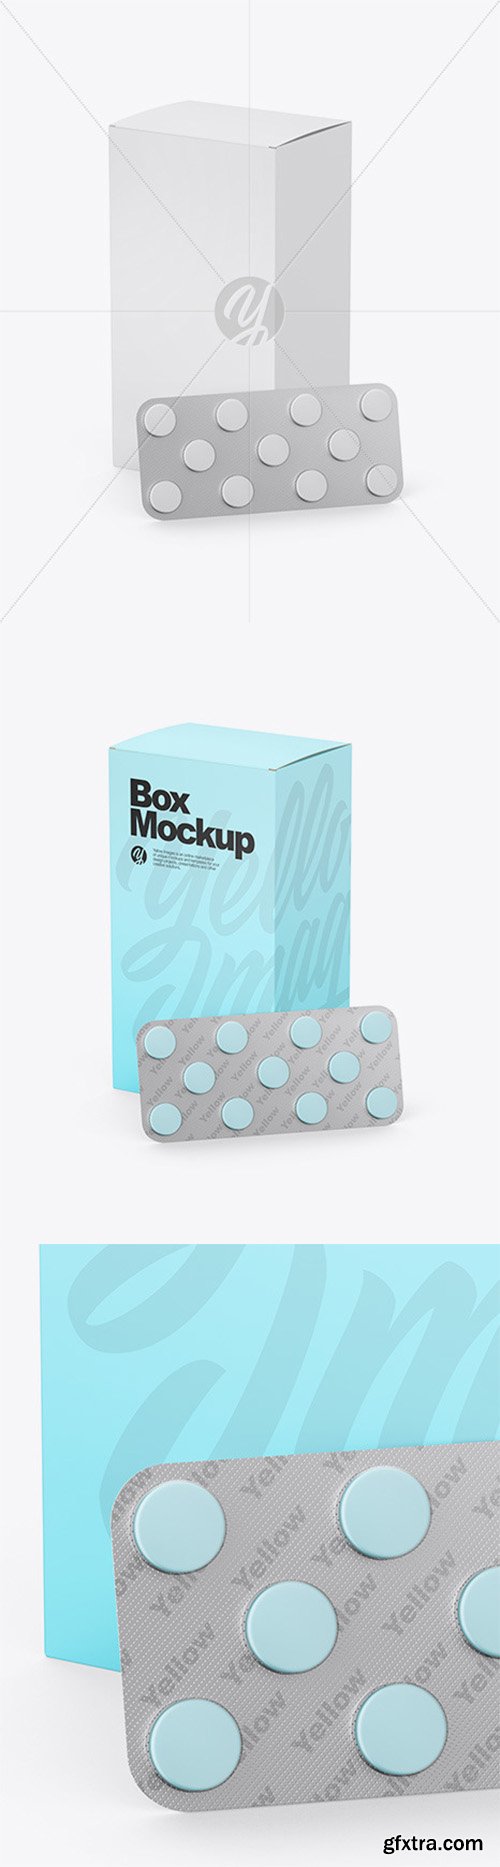 Paper Box W/ Blister Pack Mockup 78536